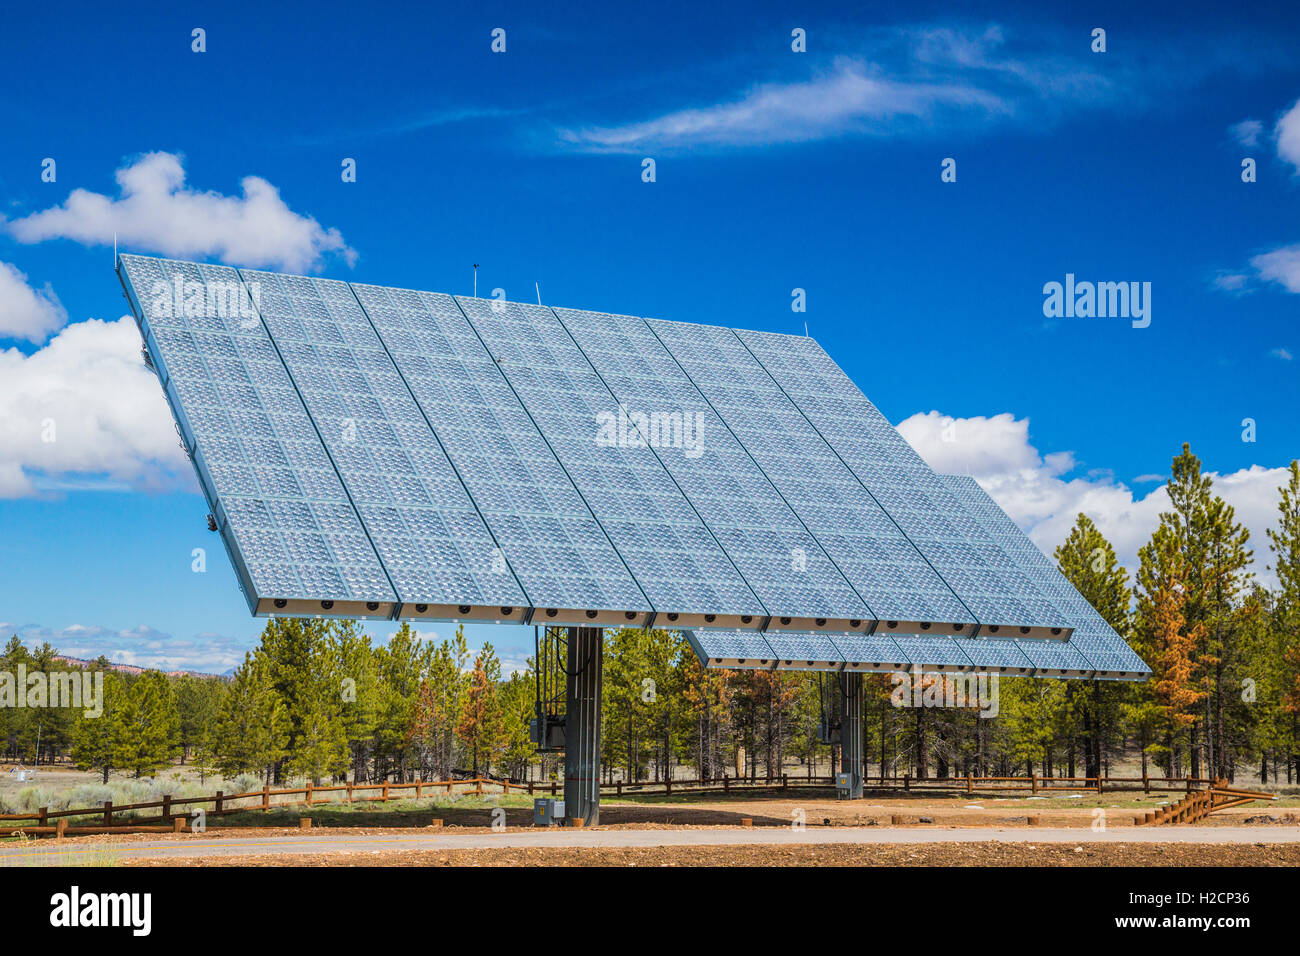 giant-solar-panels-in-utah-stock-photo-alamy